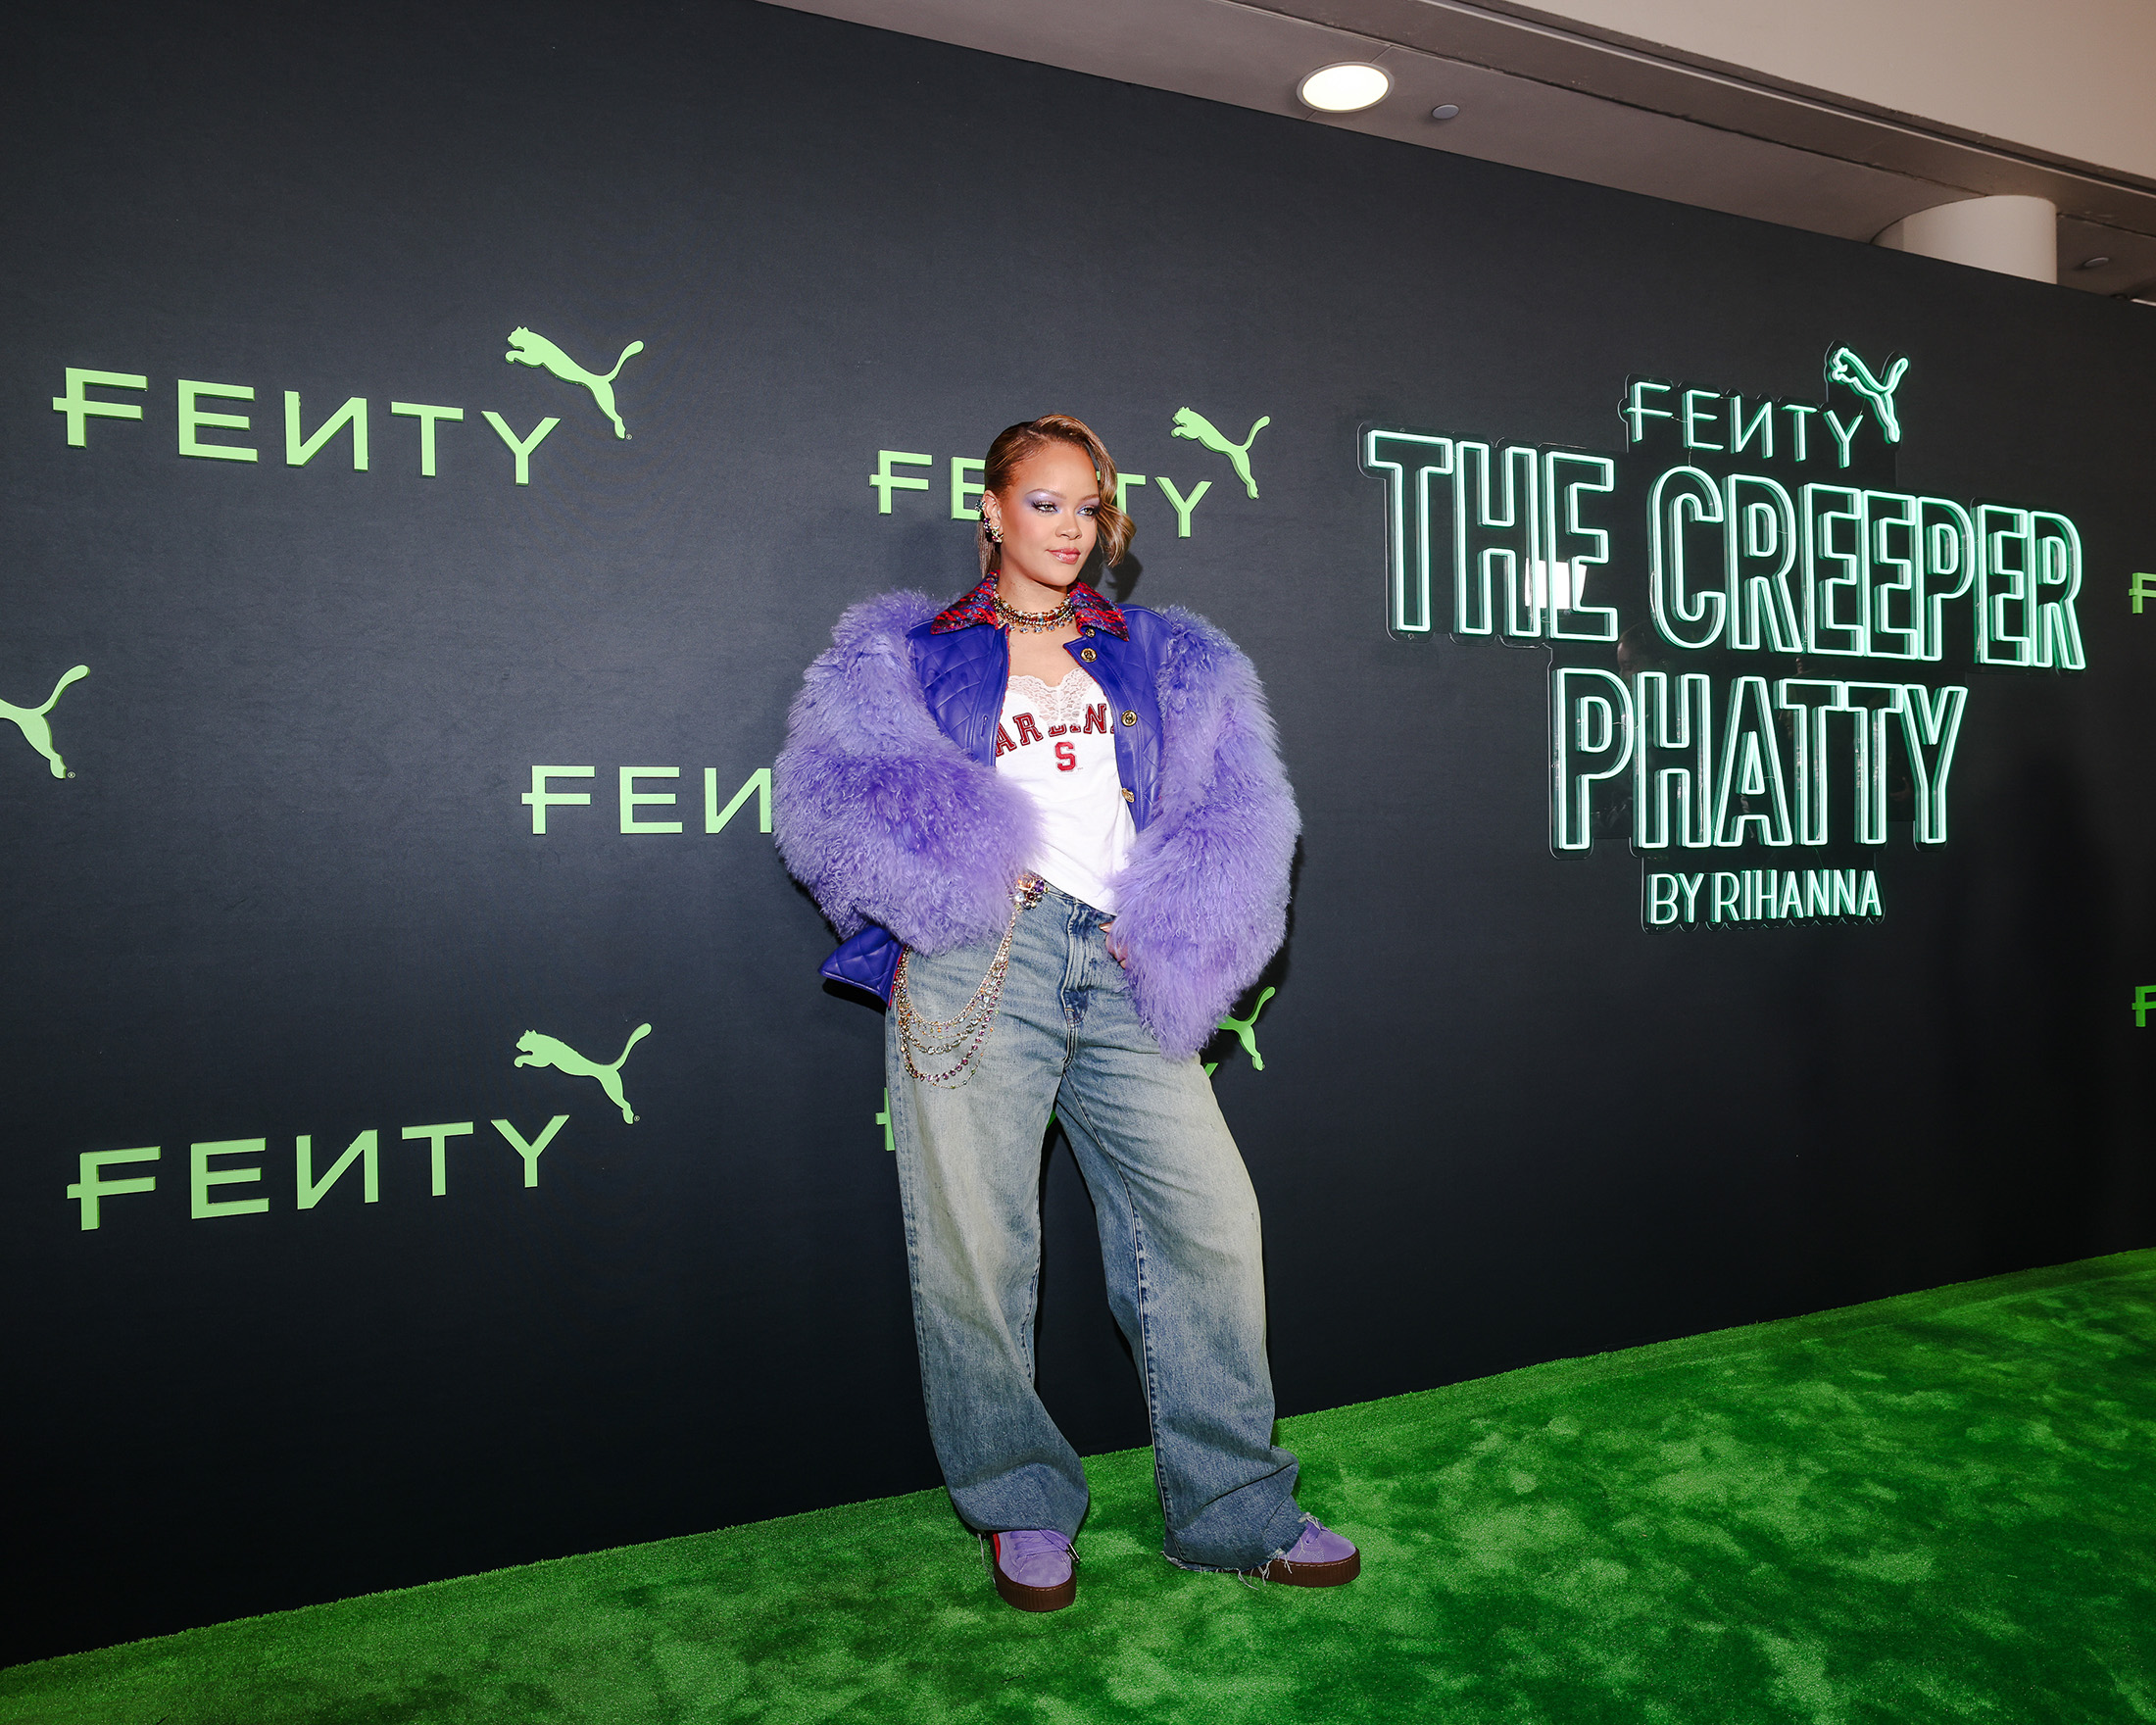 Rihanna throws a Fenty x Puma creeper Phatty Launch Party in Los Angeles